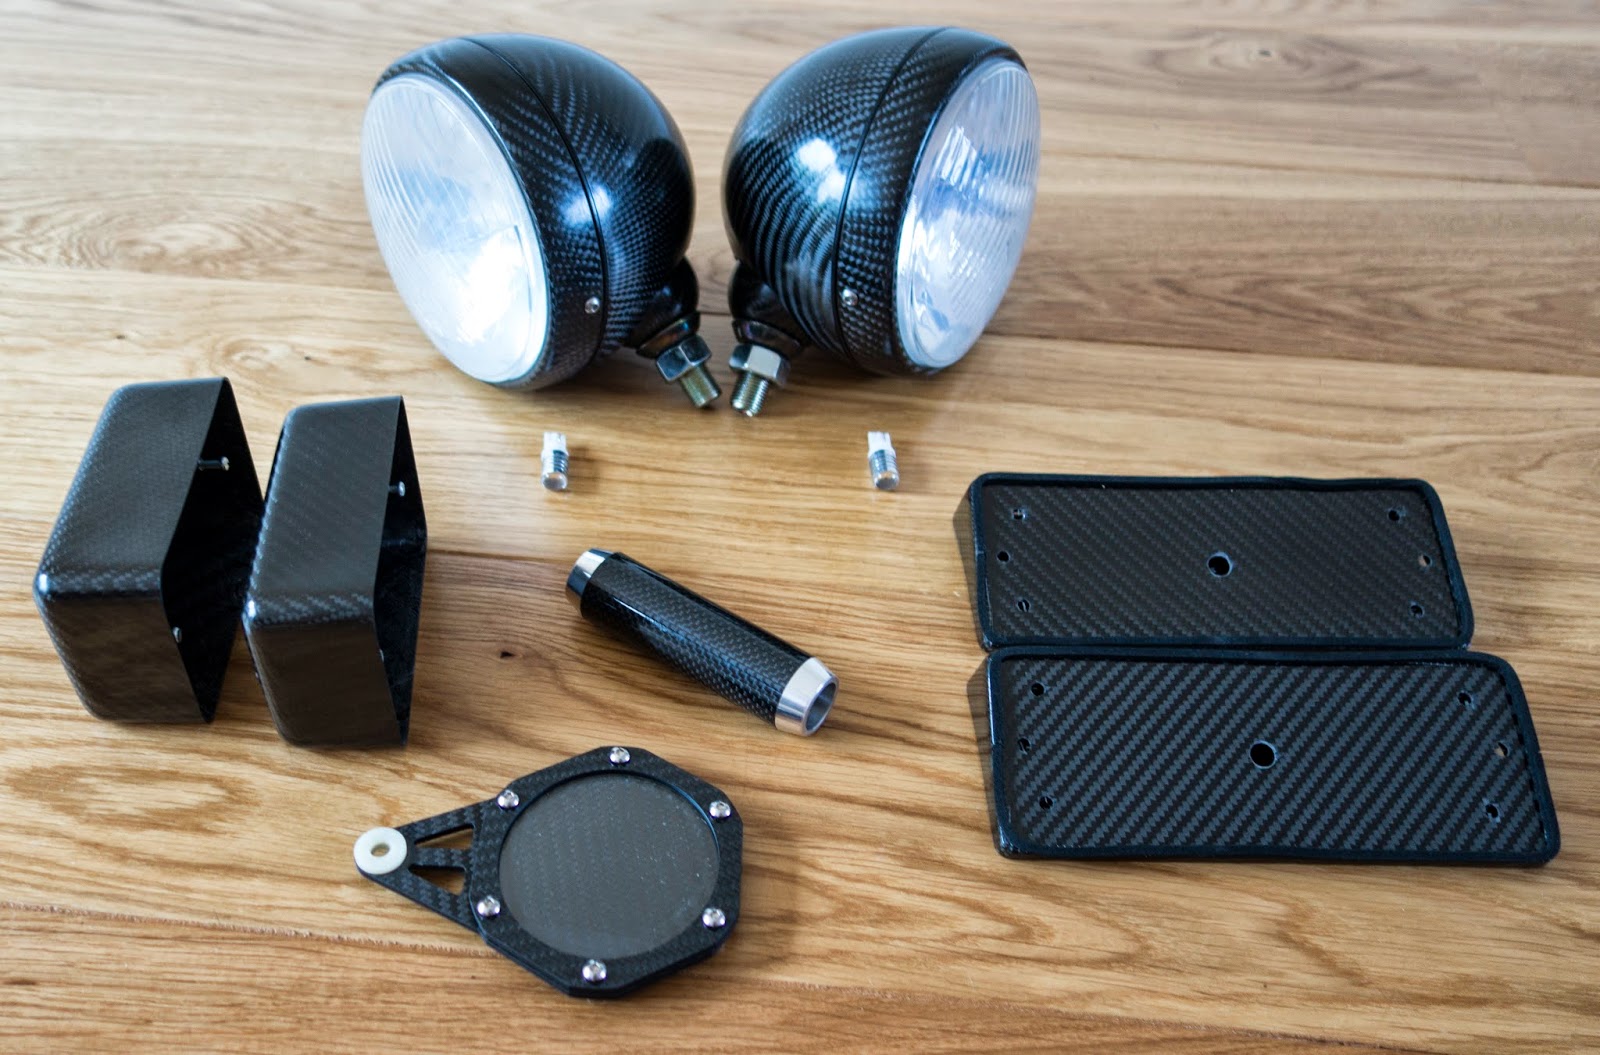 Caterham carbon accessories including headlights, rear light blocks, handbrake lever and tax disc holder